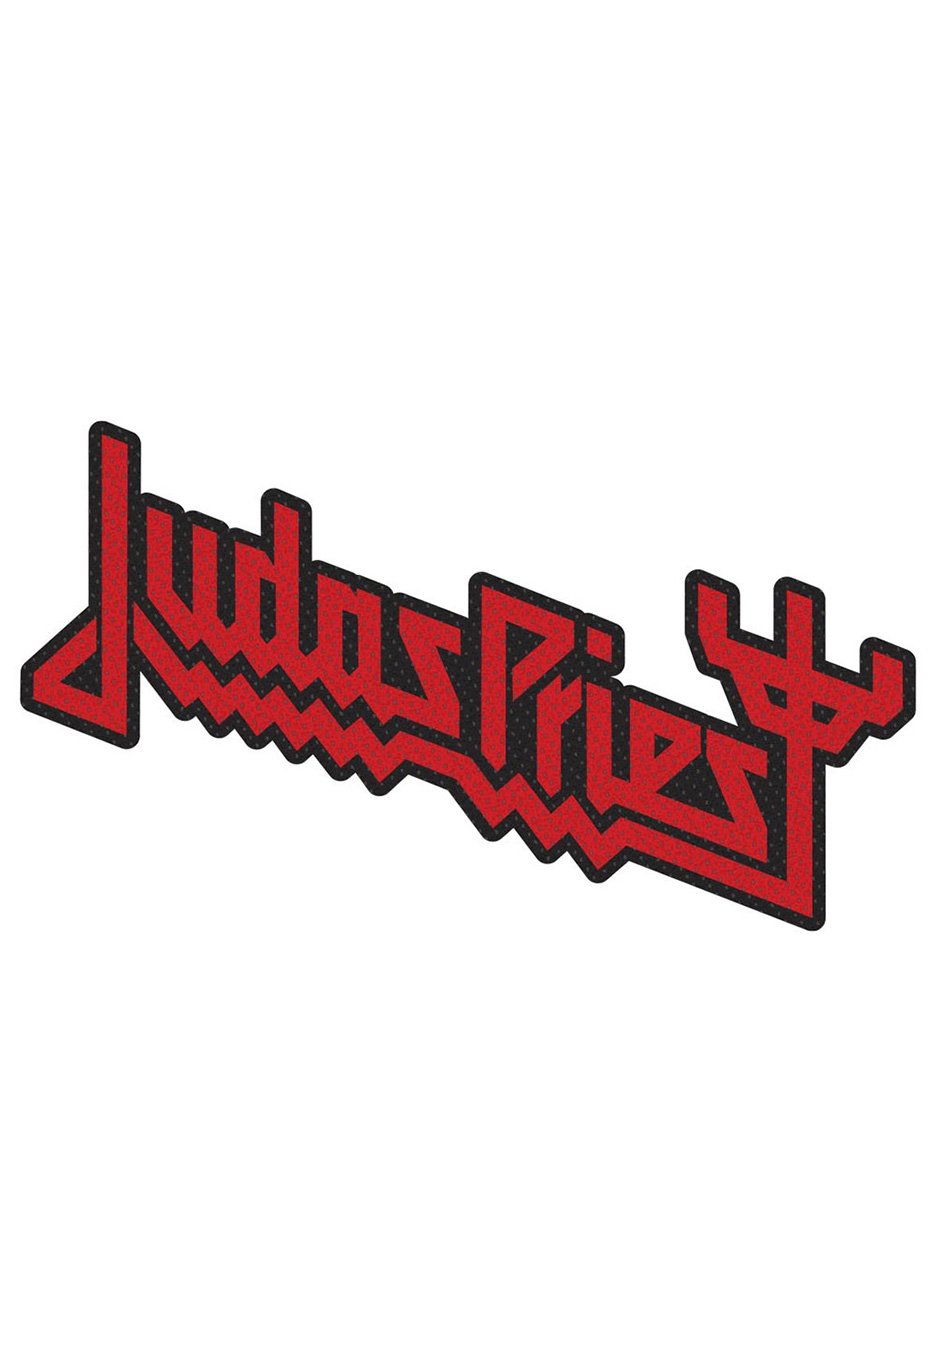 Judas Priest - Logo Cut Out - Patch